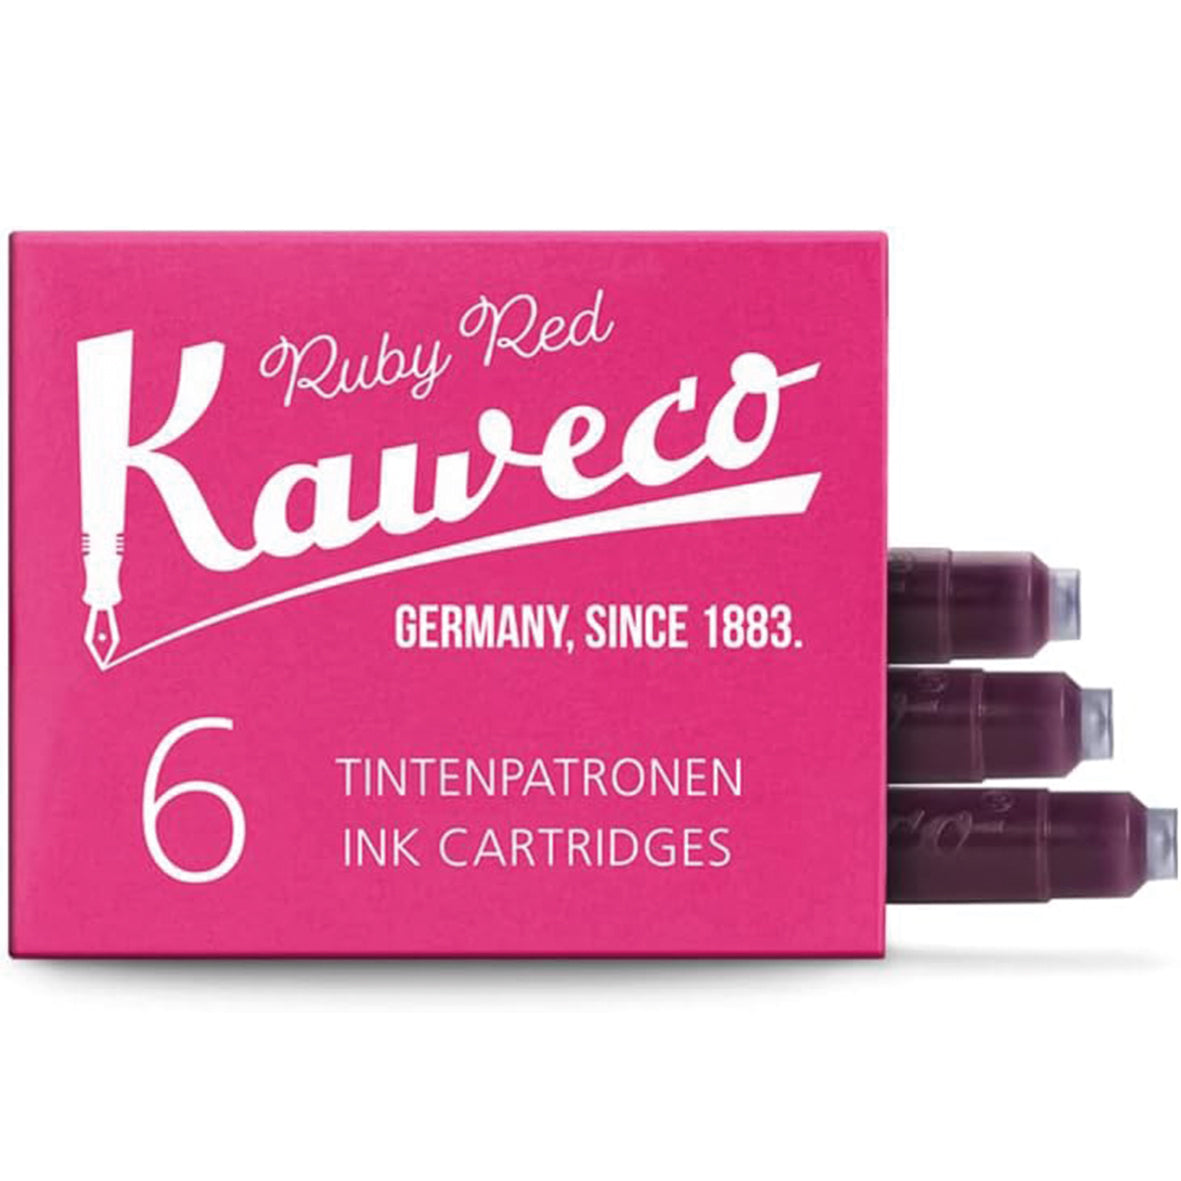 Tintenpatronen Kaweco Ruby Red, 6 Stück